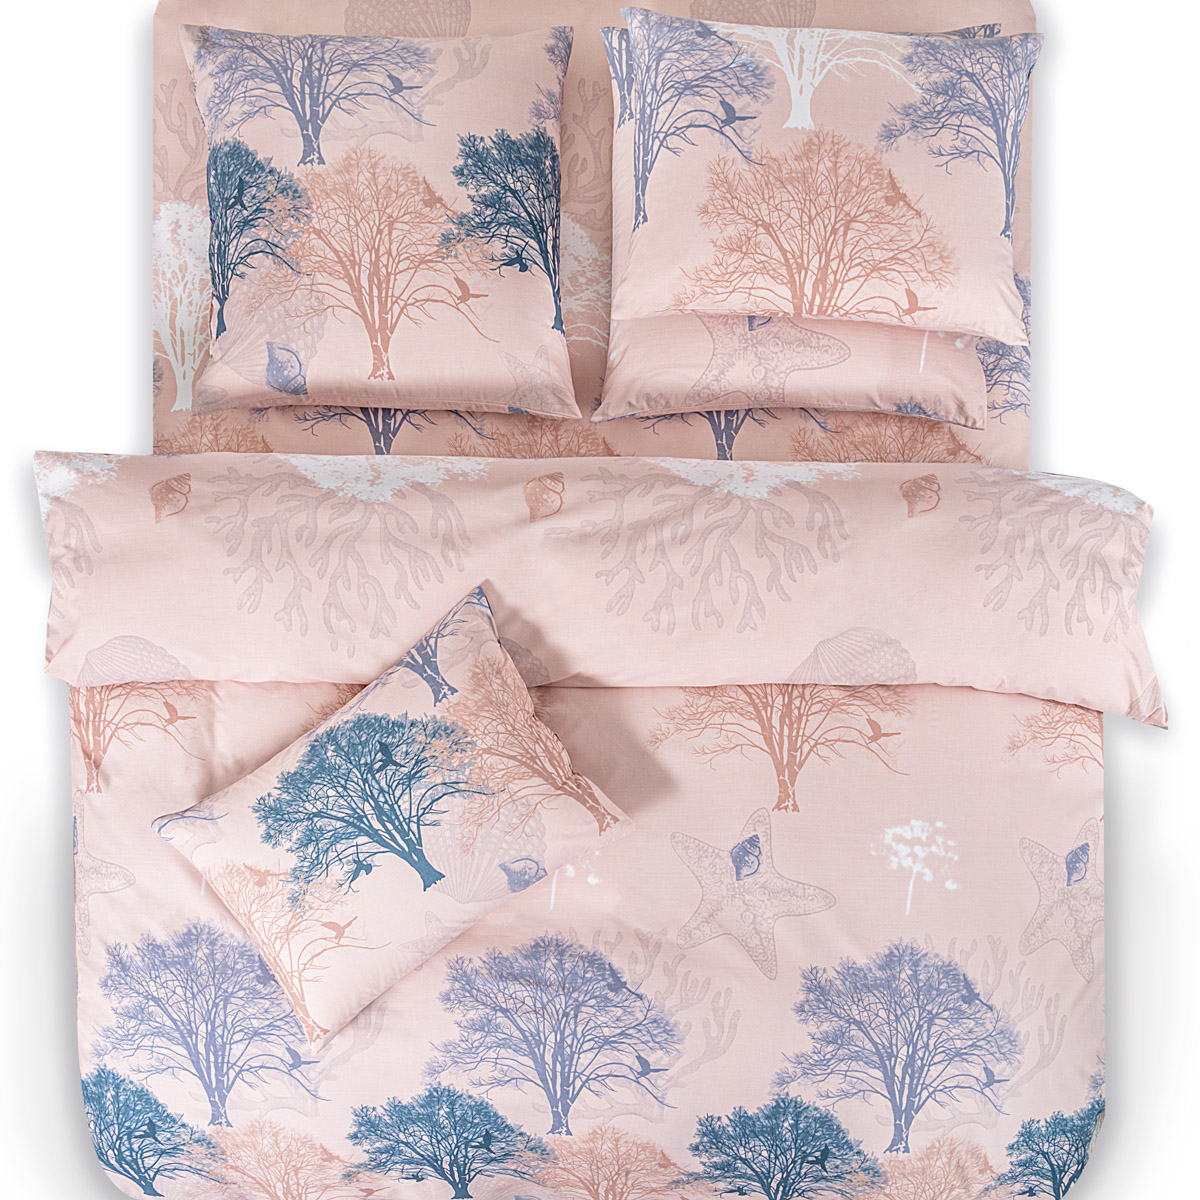 Простыня на резинке Daily by T Элвуд розовый с сиреневым 180х200+25 см, цвет сиреневый - фото 2